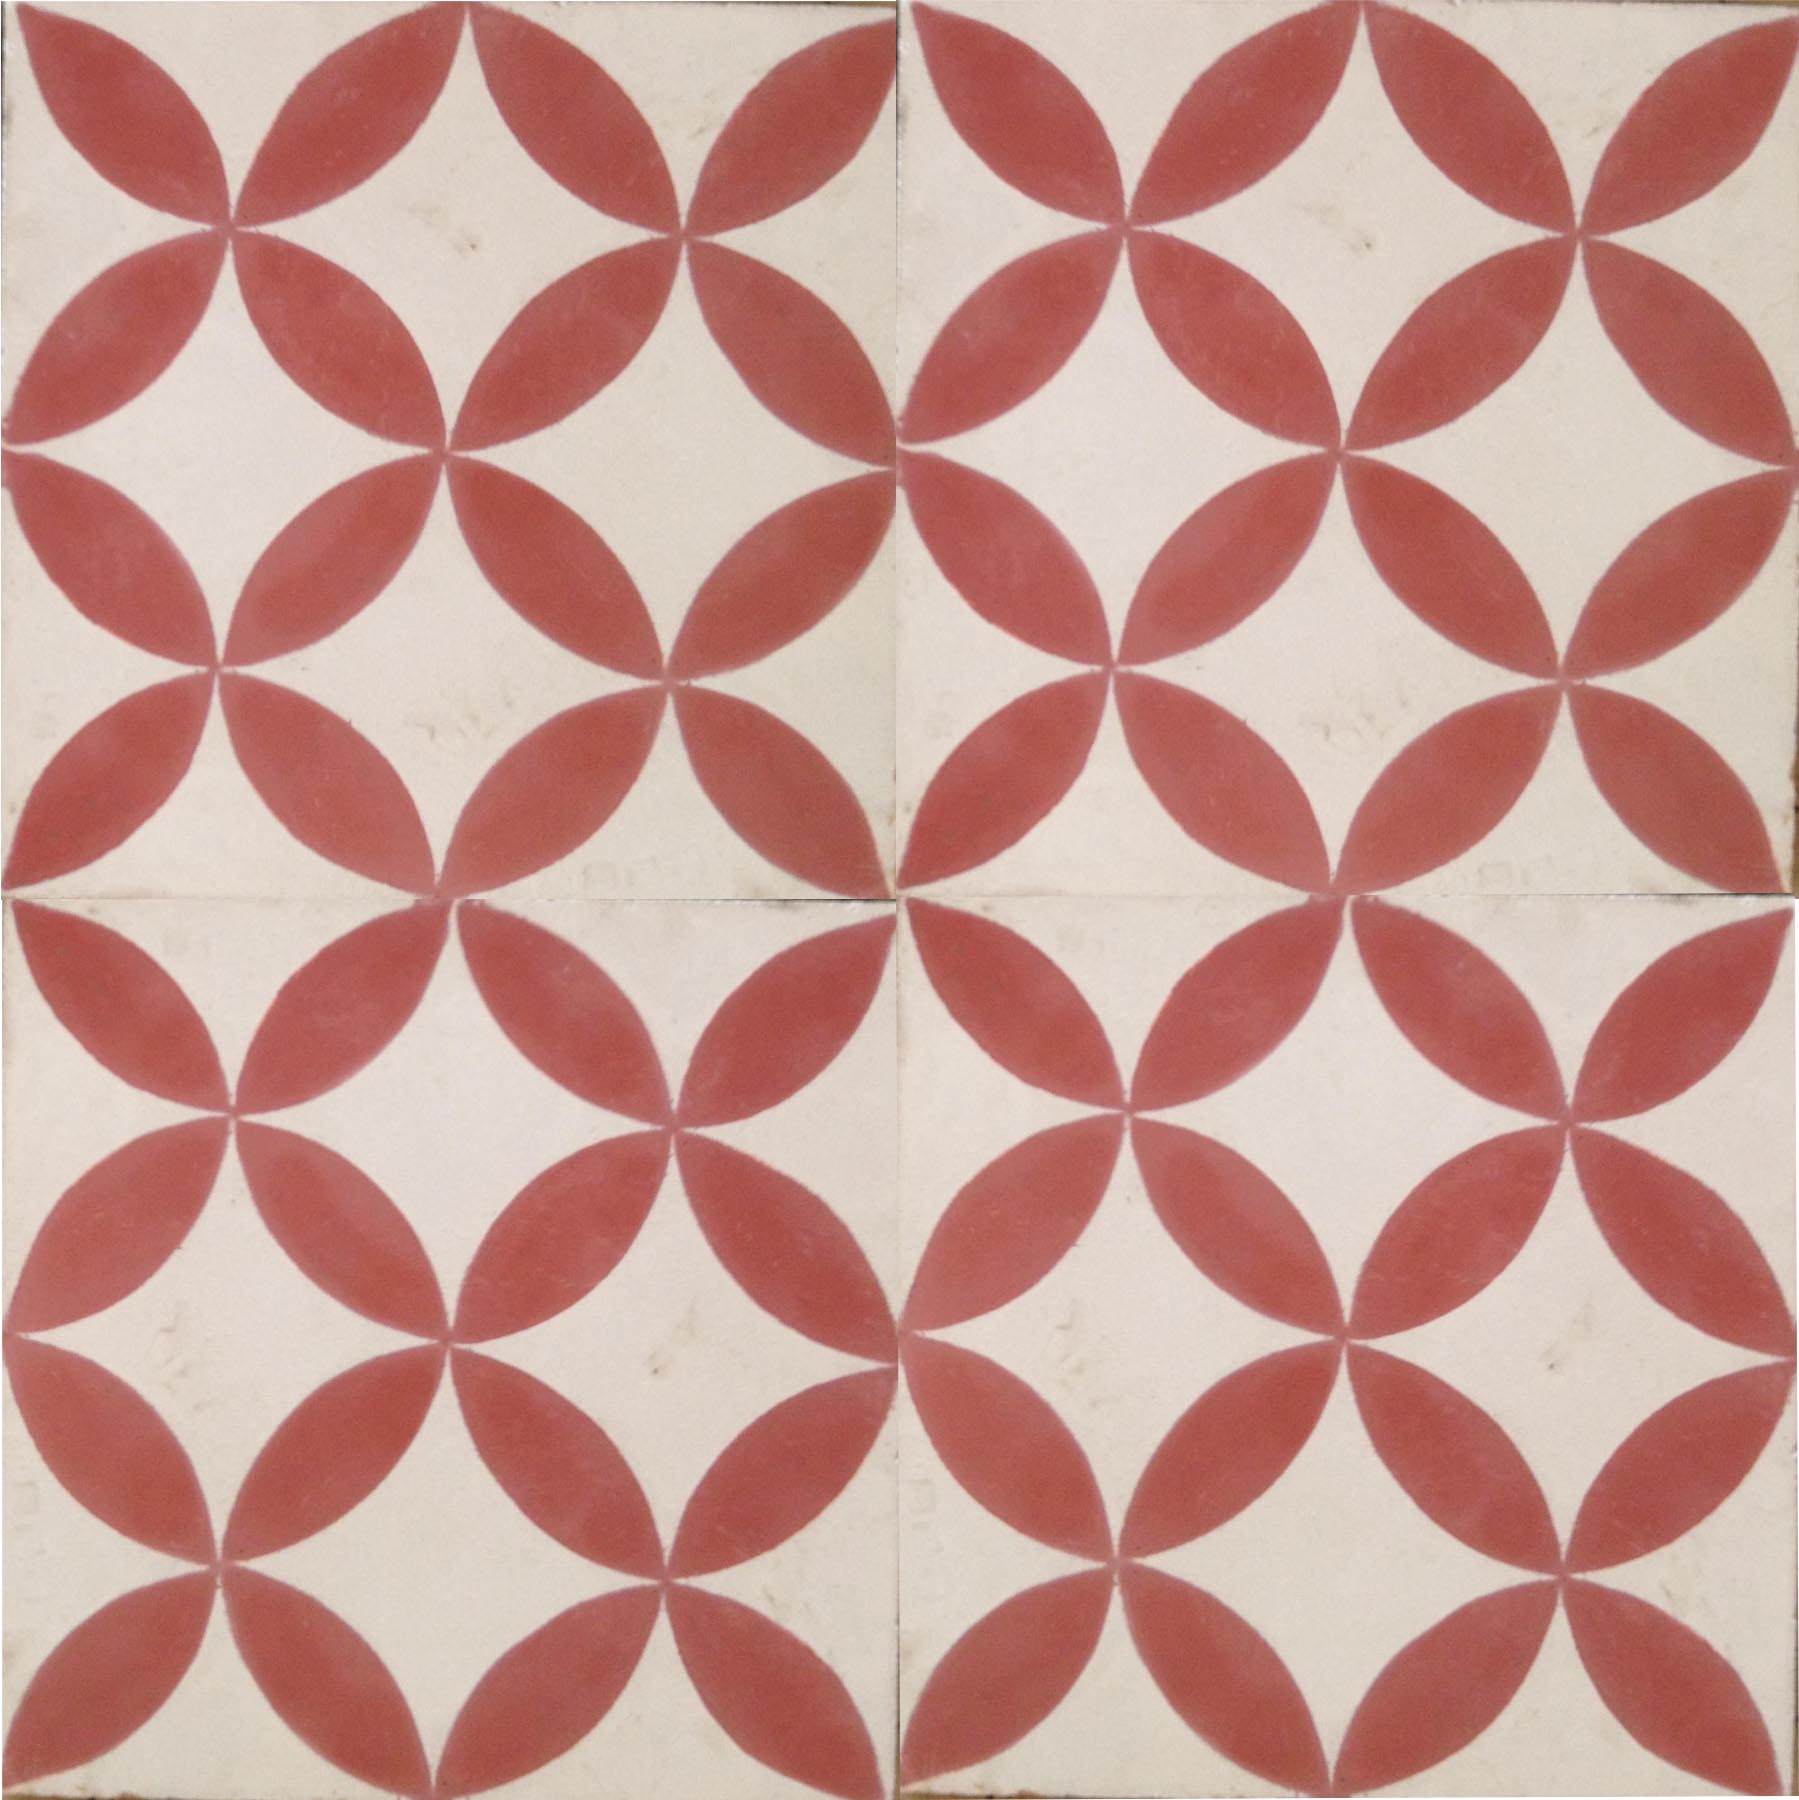 Petals Red Cement Tile